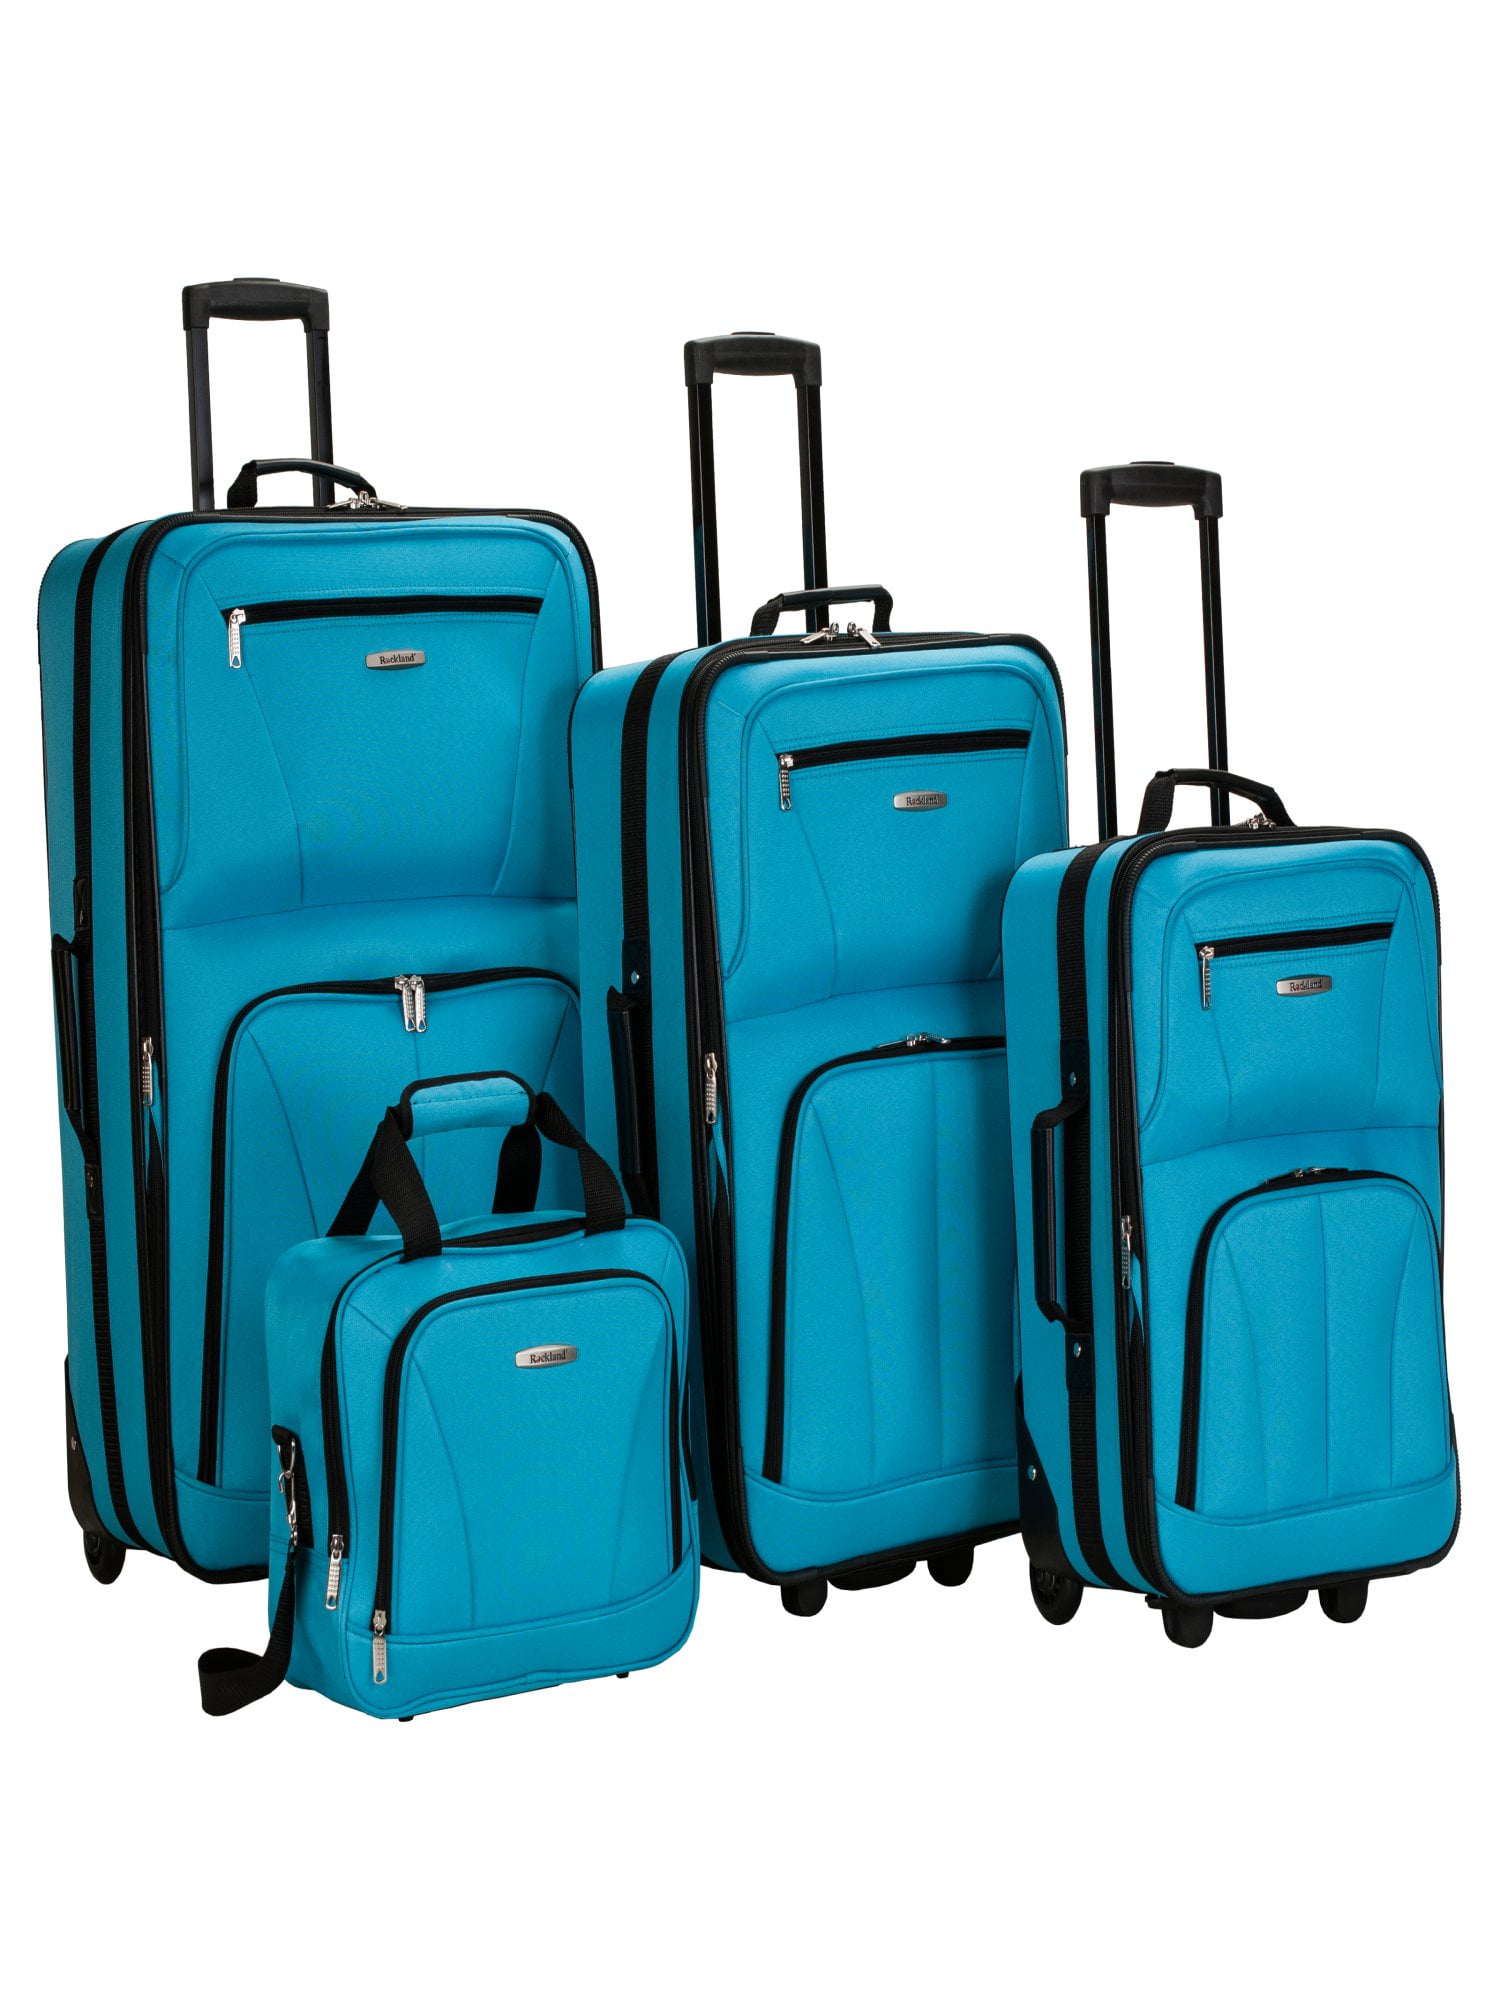 Rockland Journey 4-Piece Luggage Set - Walmart.com